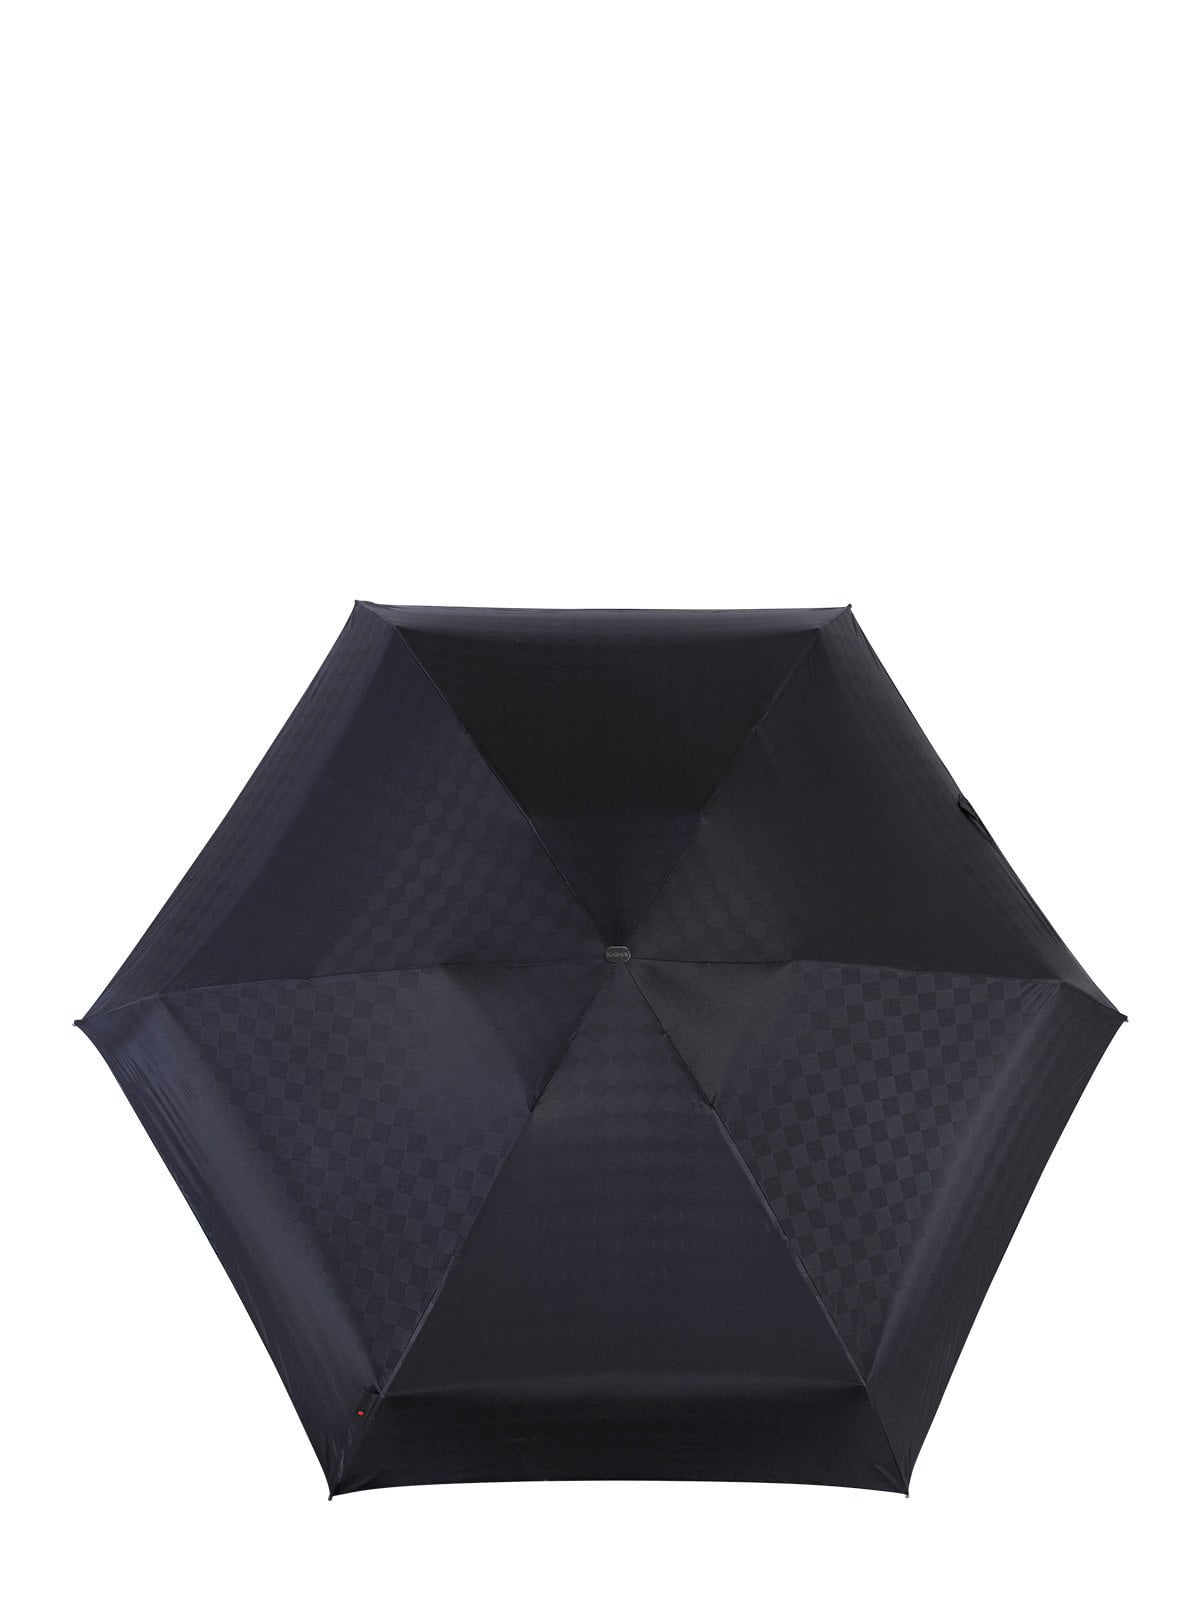 Belami by Knirps The Original Telescopic Umbrella - Black